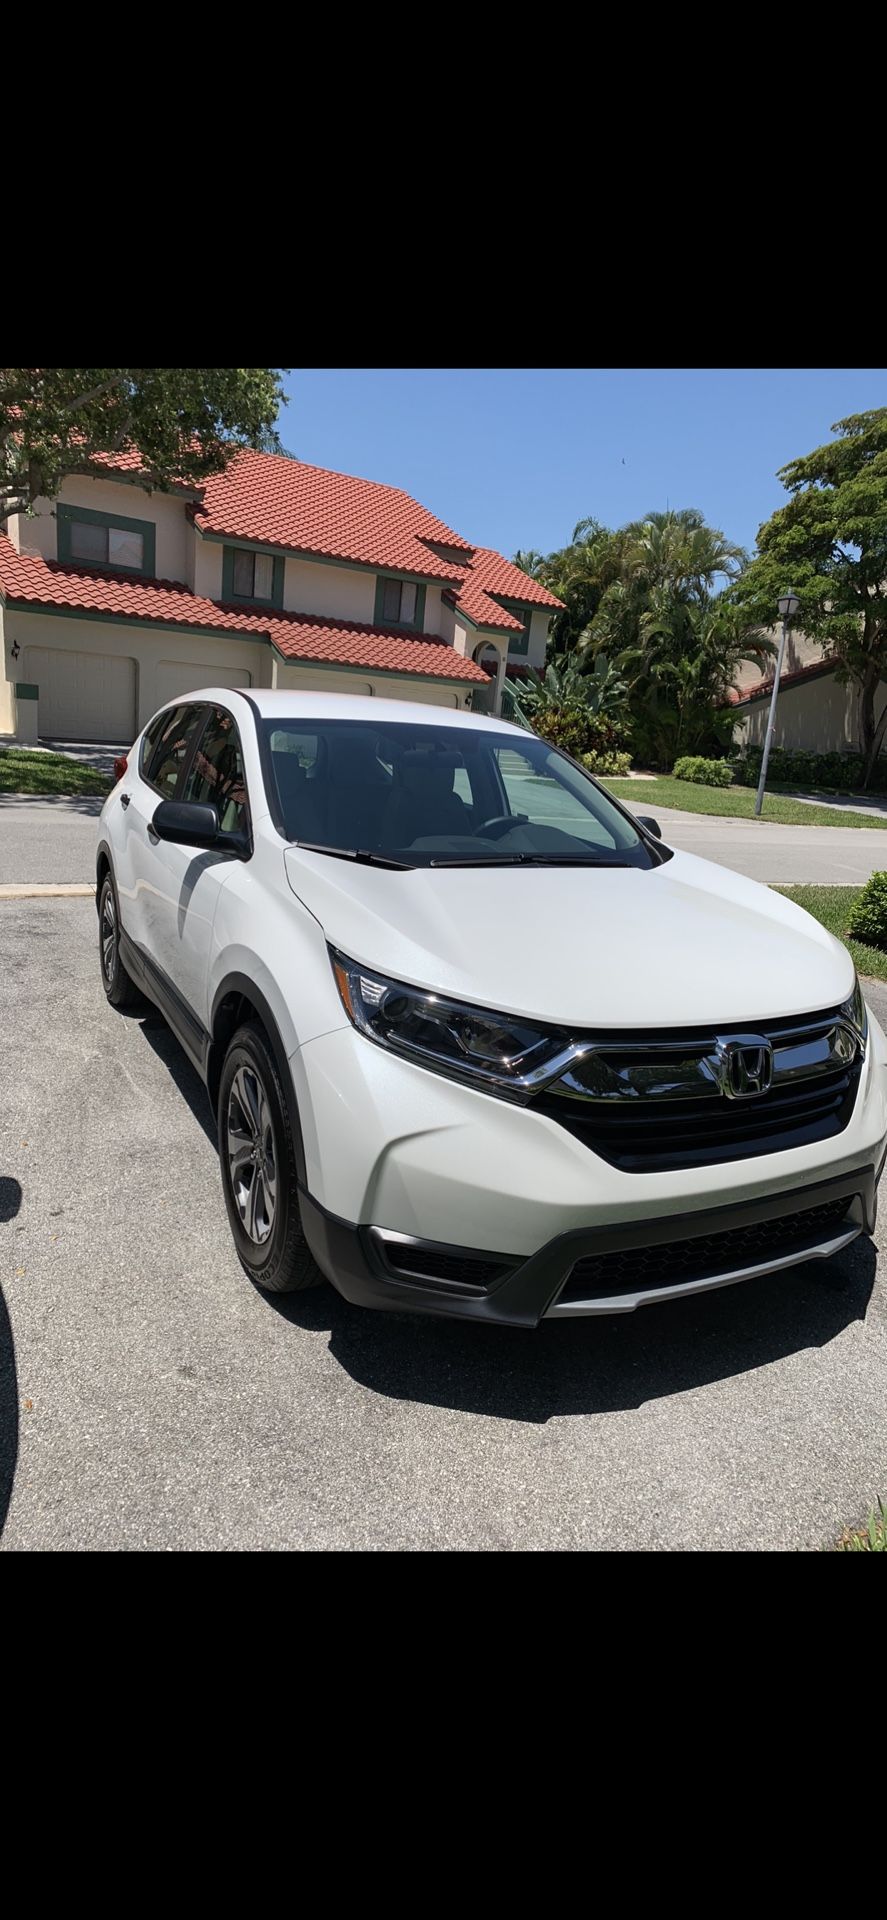 2019 Honda CRV LX suv $21,557